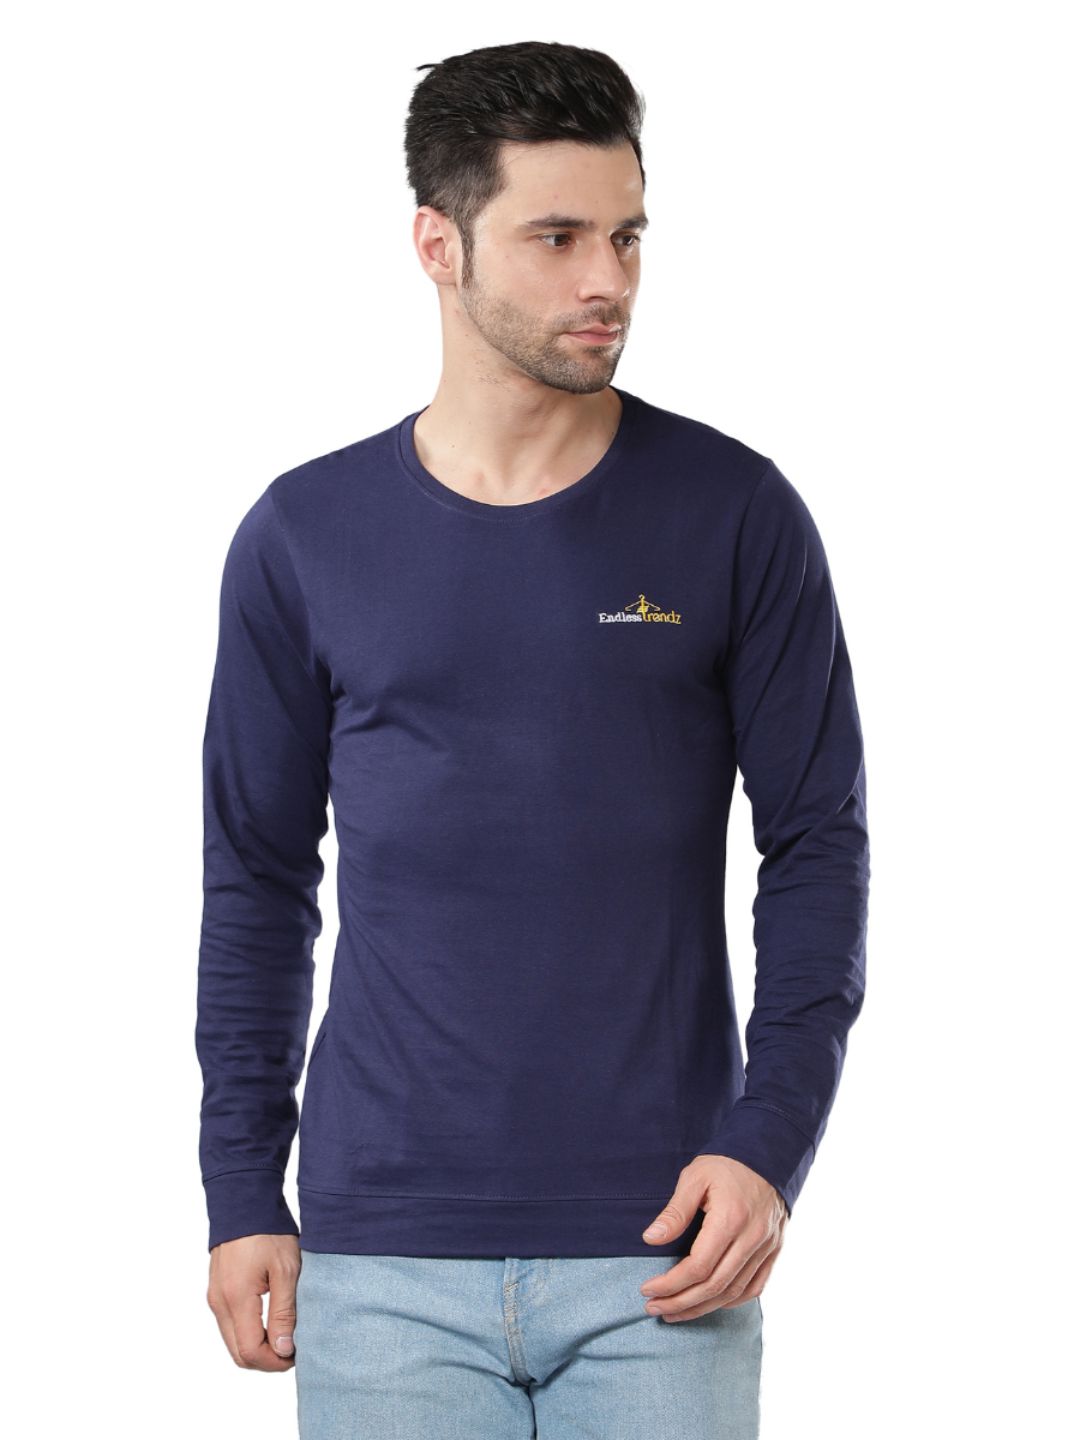 EndlessTrendz Cotton-Rich Ultra-Soft T-Shirt in Classic Navy Blue